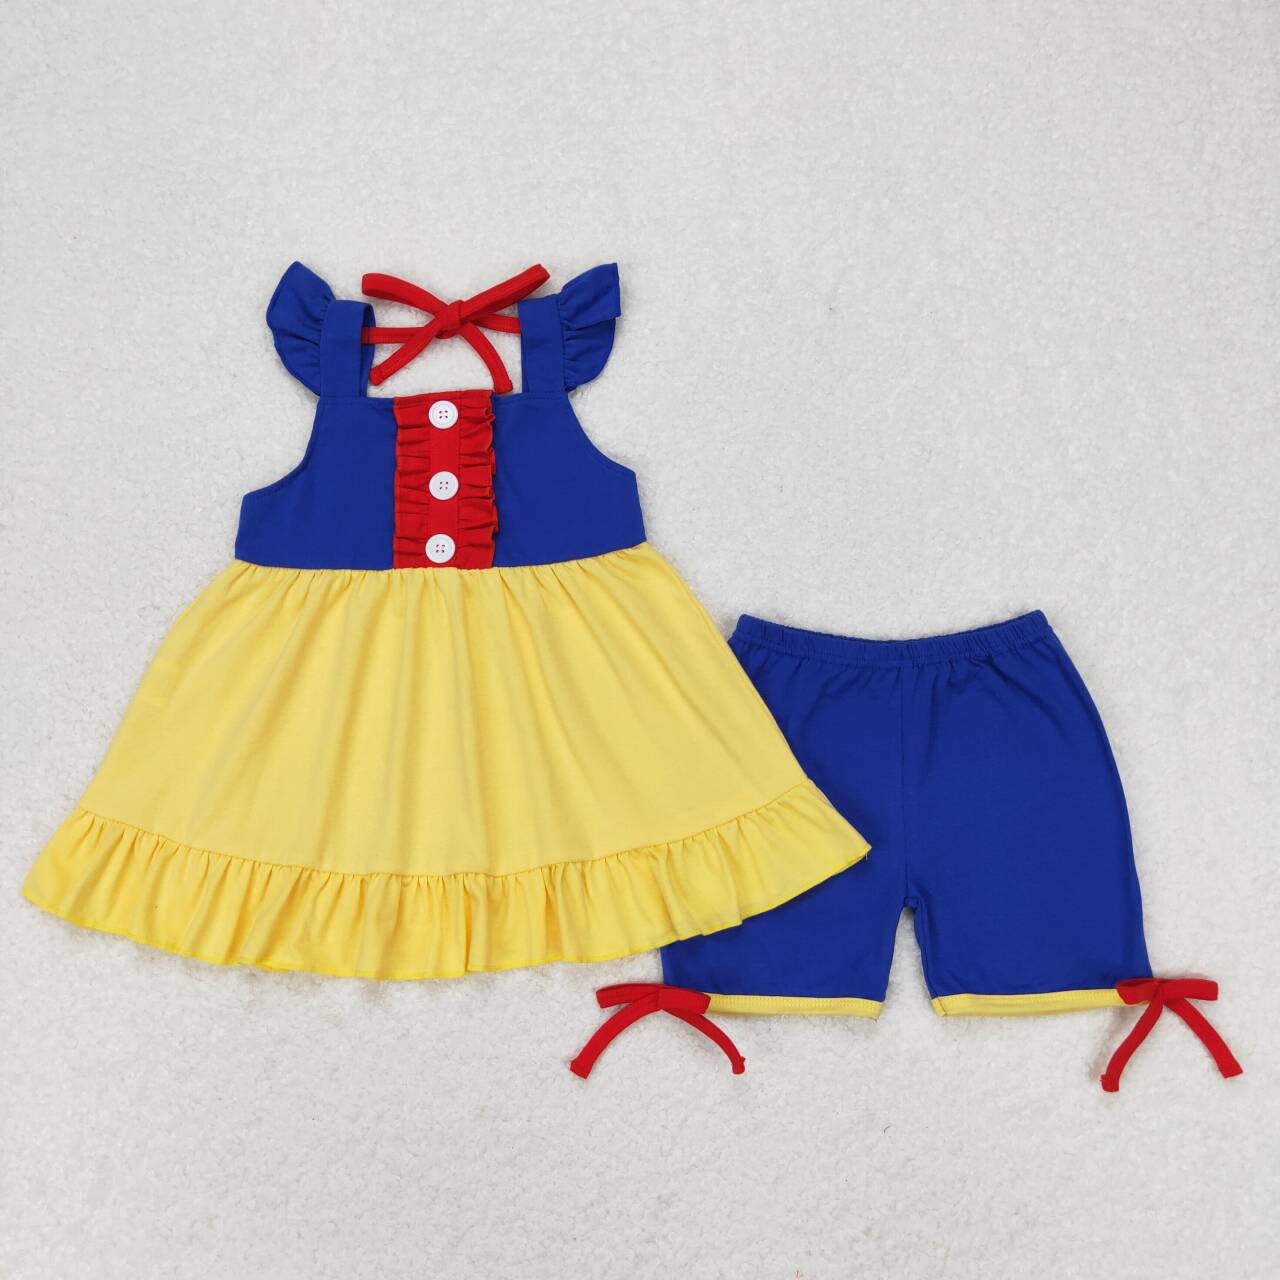 Cartoon Princess Design Girls Summer Clothes Set Sisters Wear